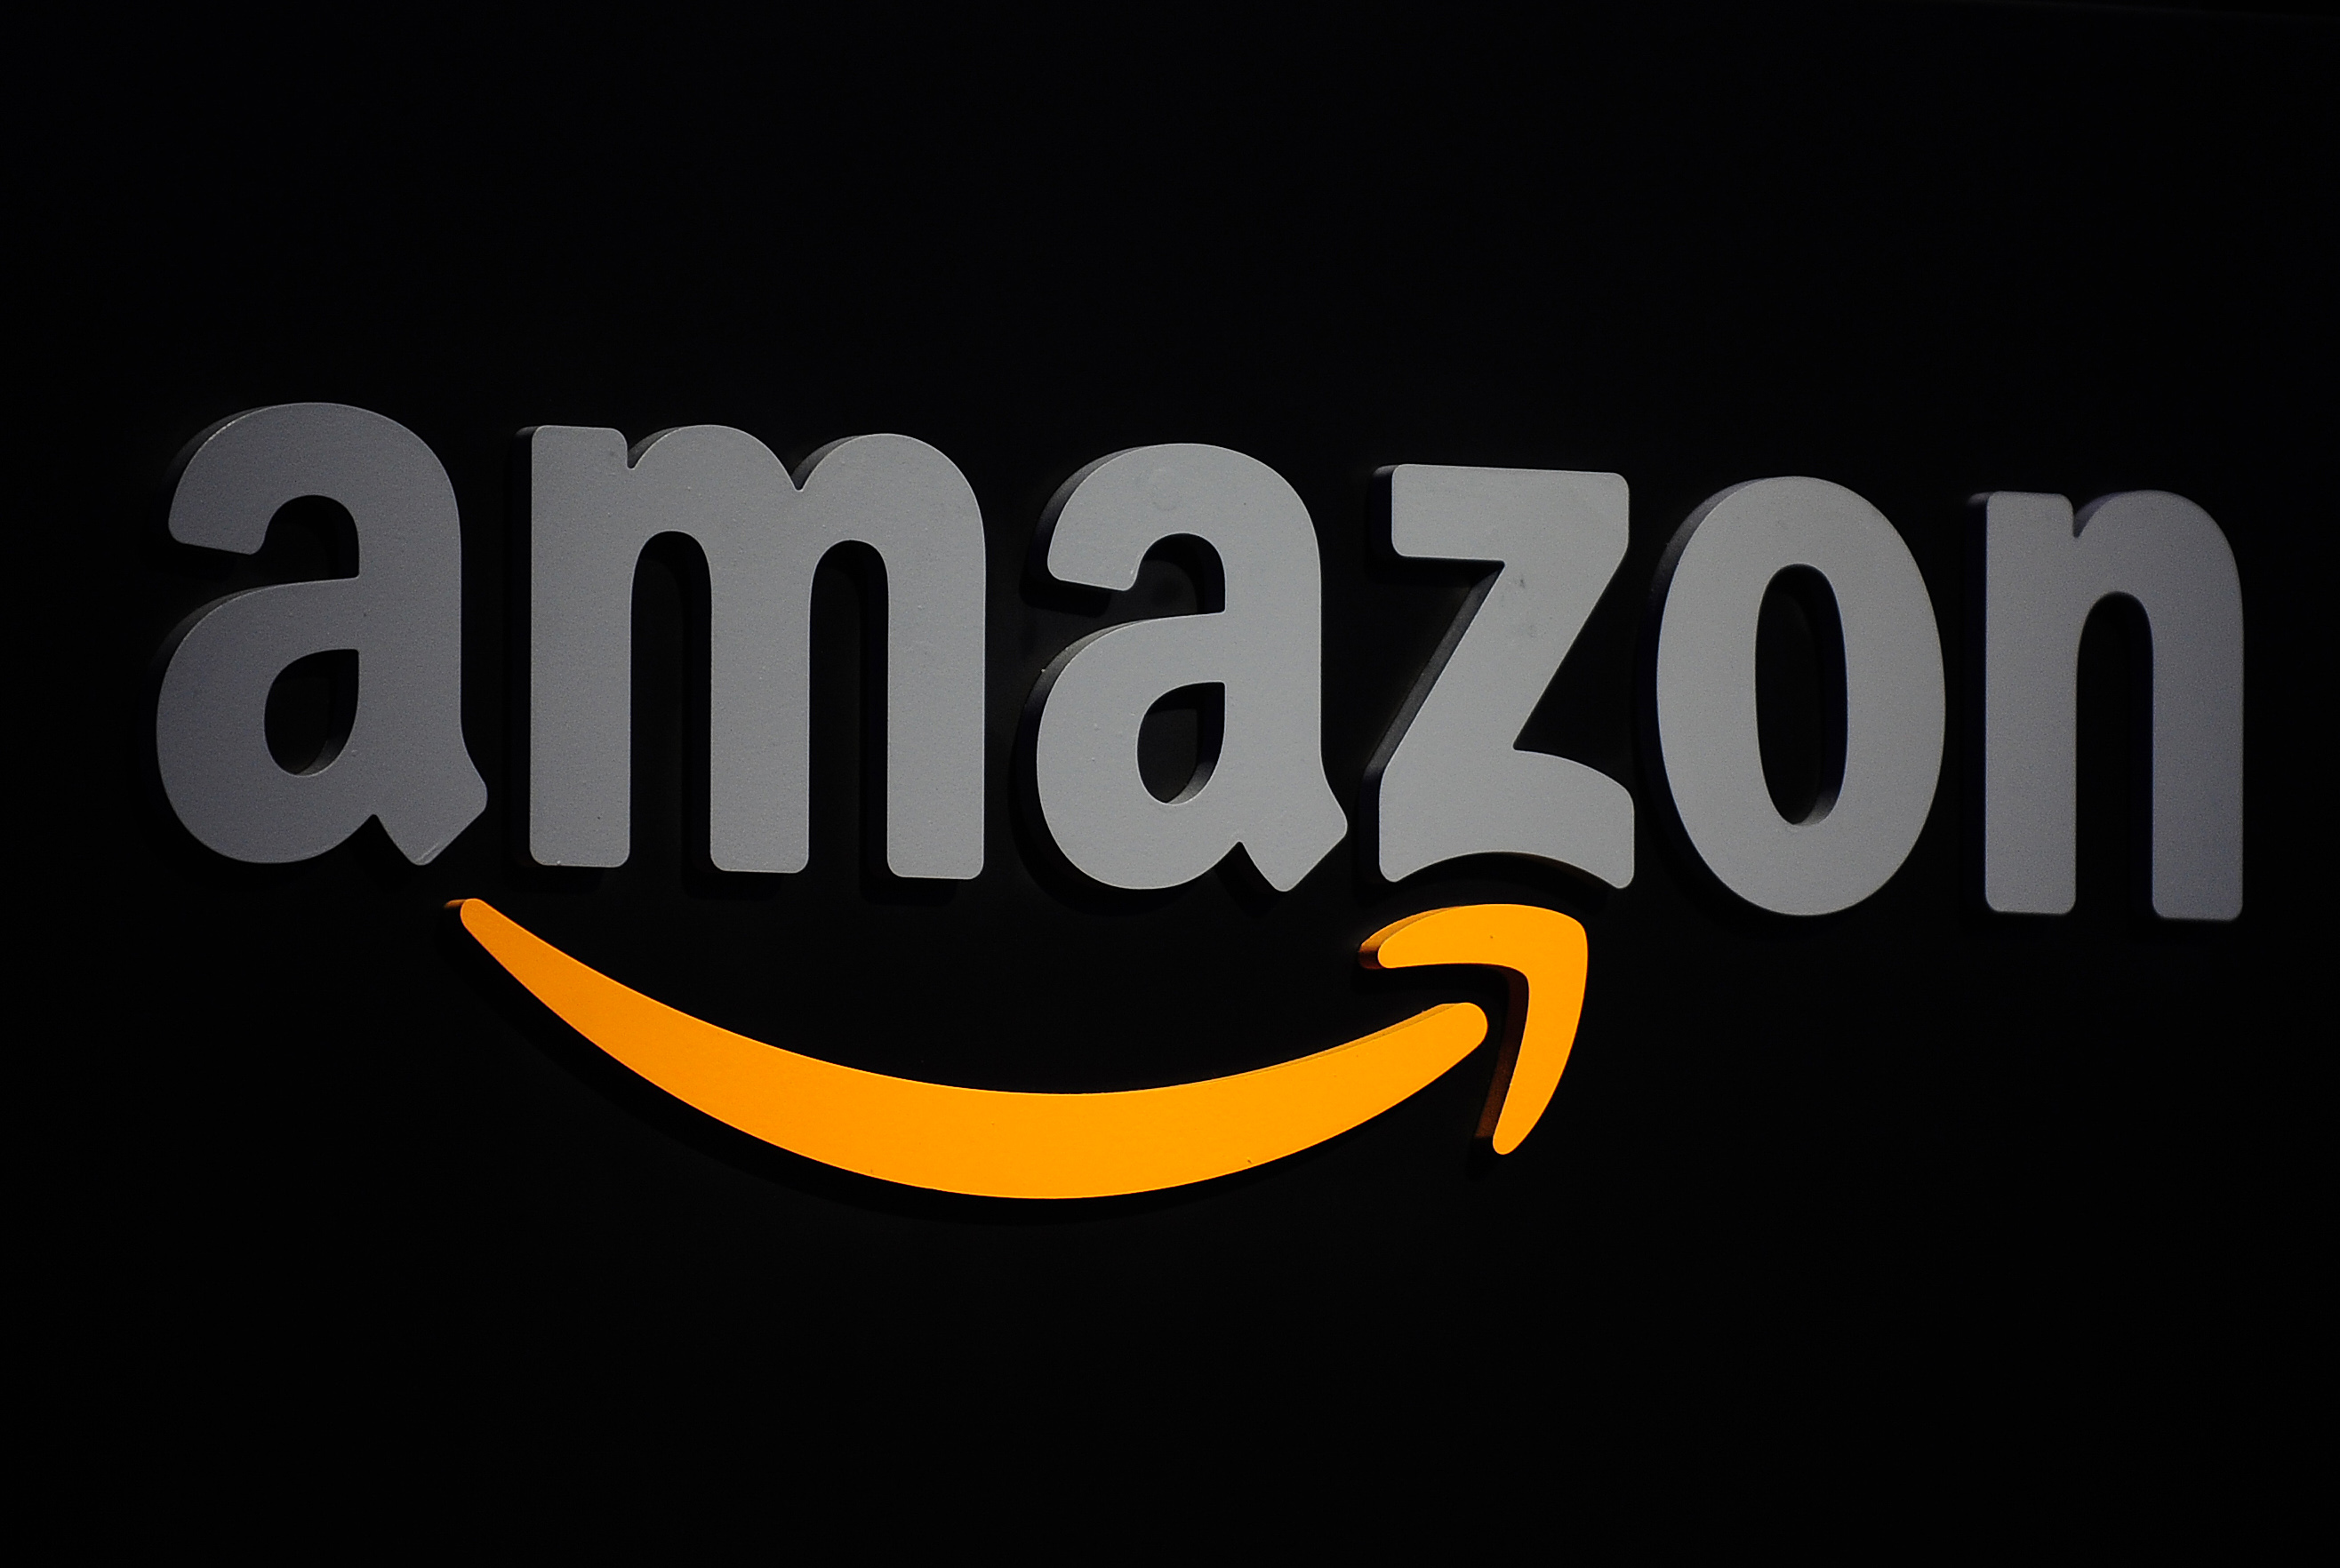 Breeding intentional expand L'Antitrust Ue avvia procedura contro Amazon - ItaliaOggi.it